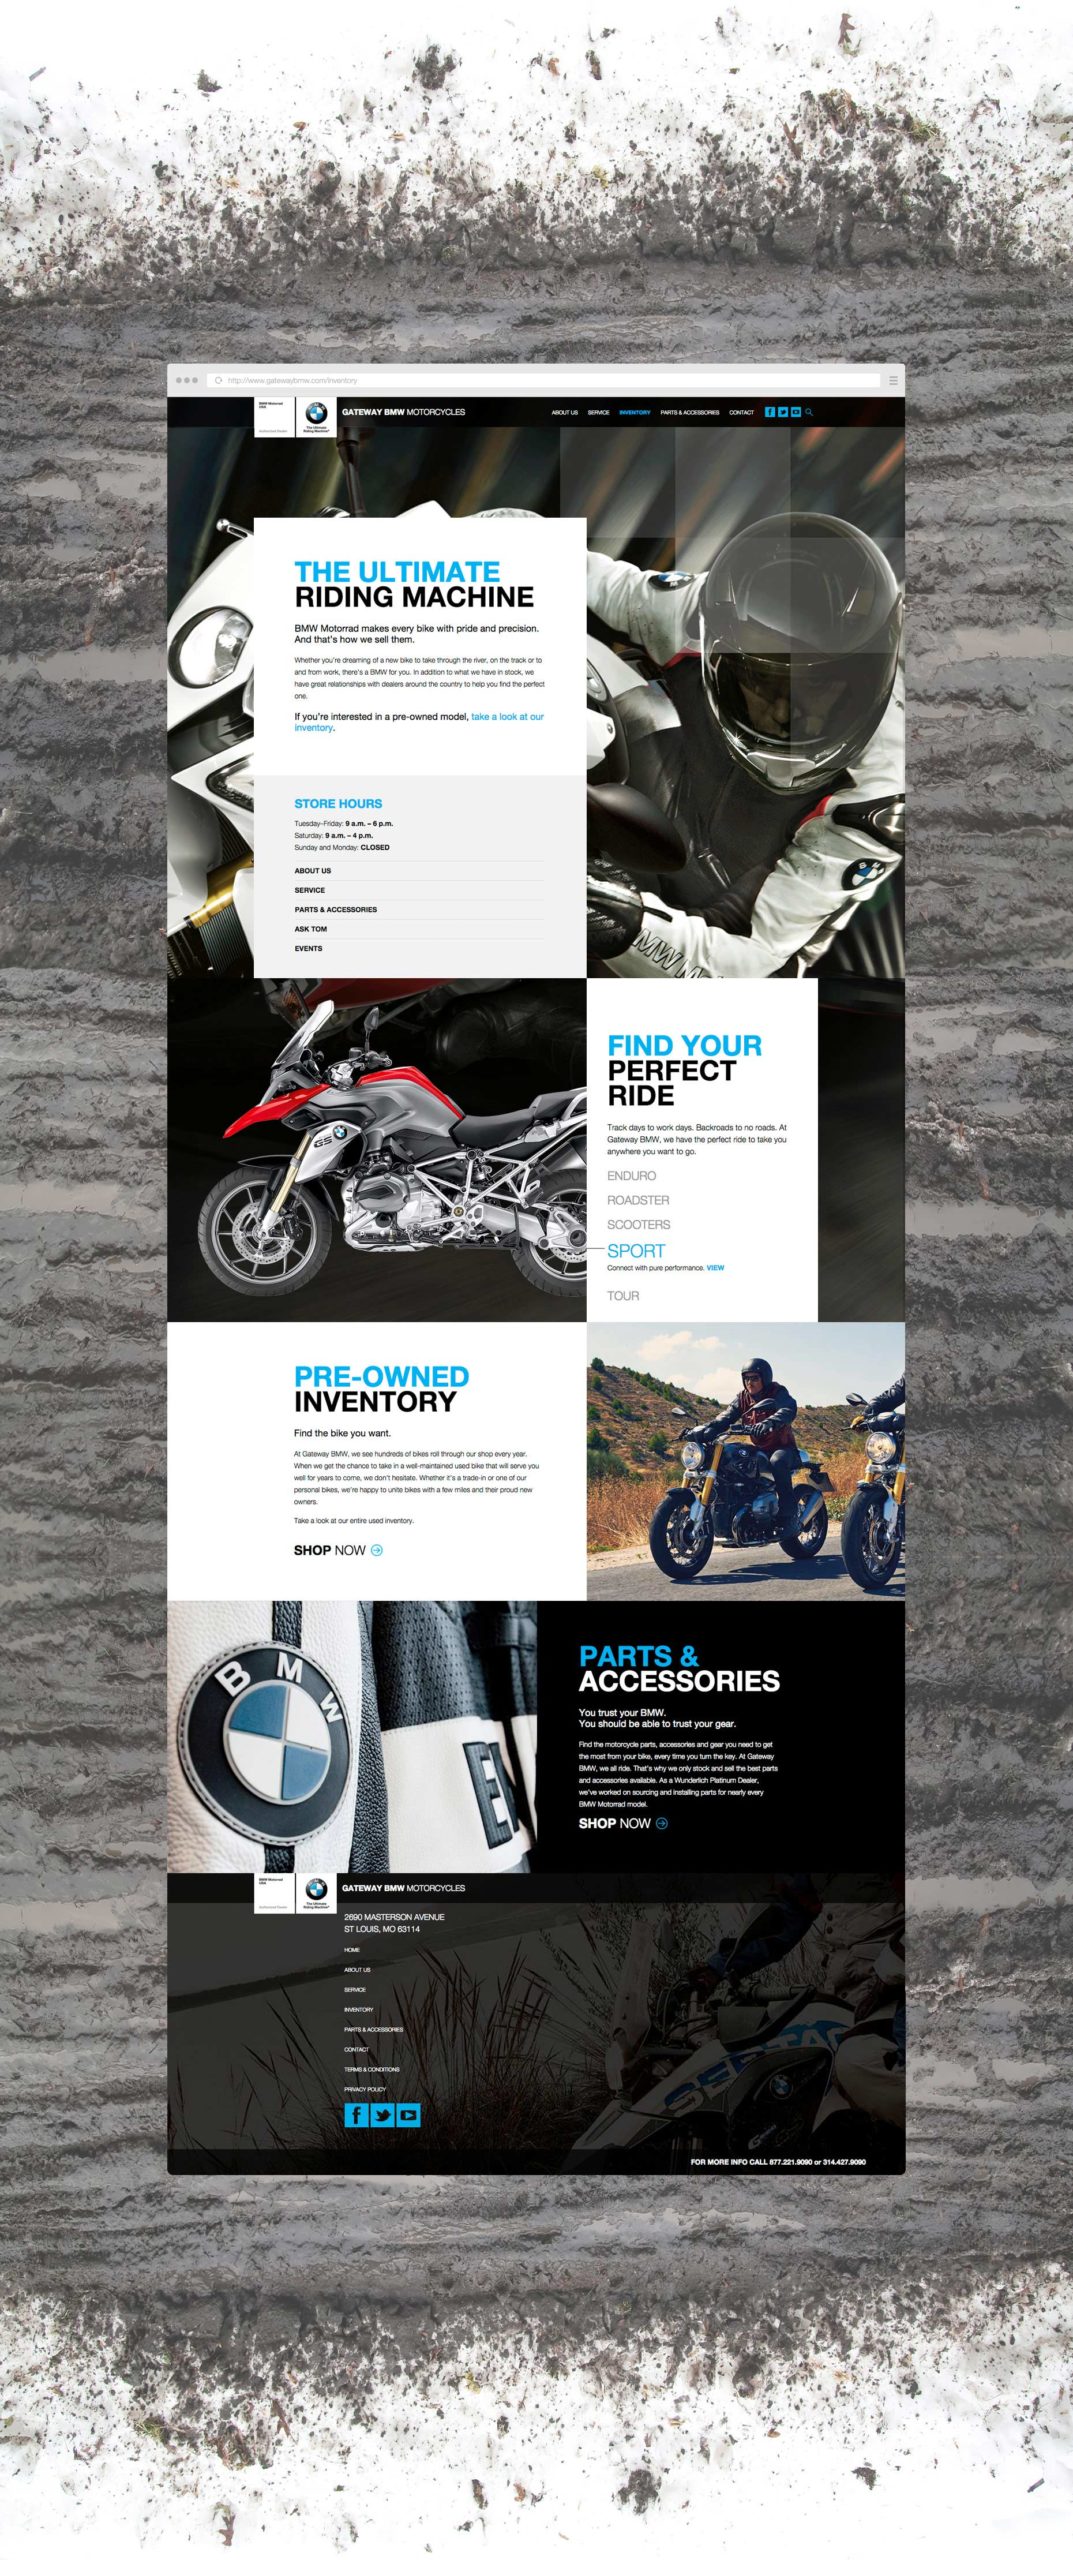 Website design for Gateway BMW